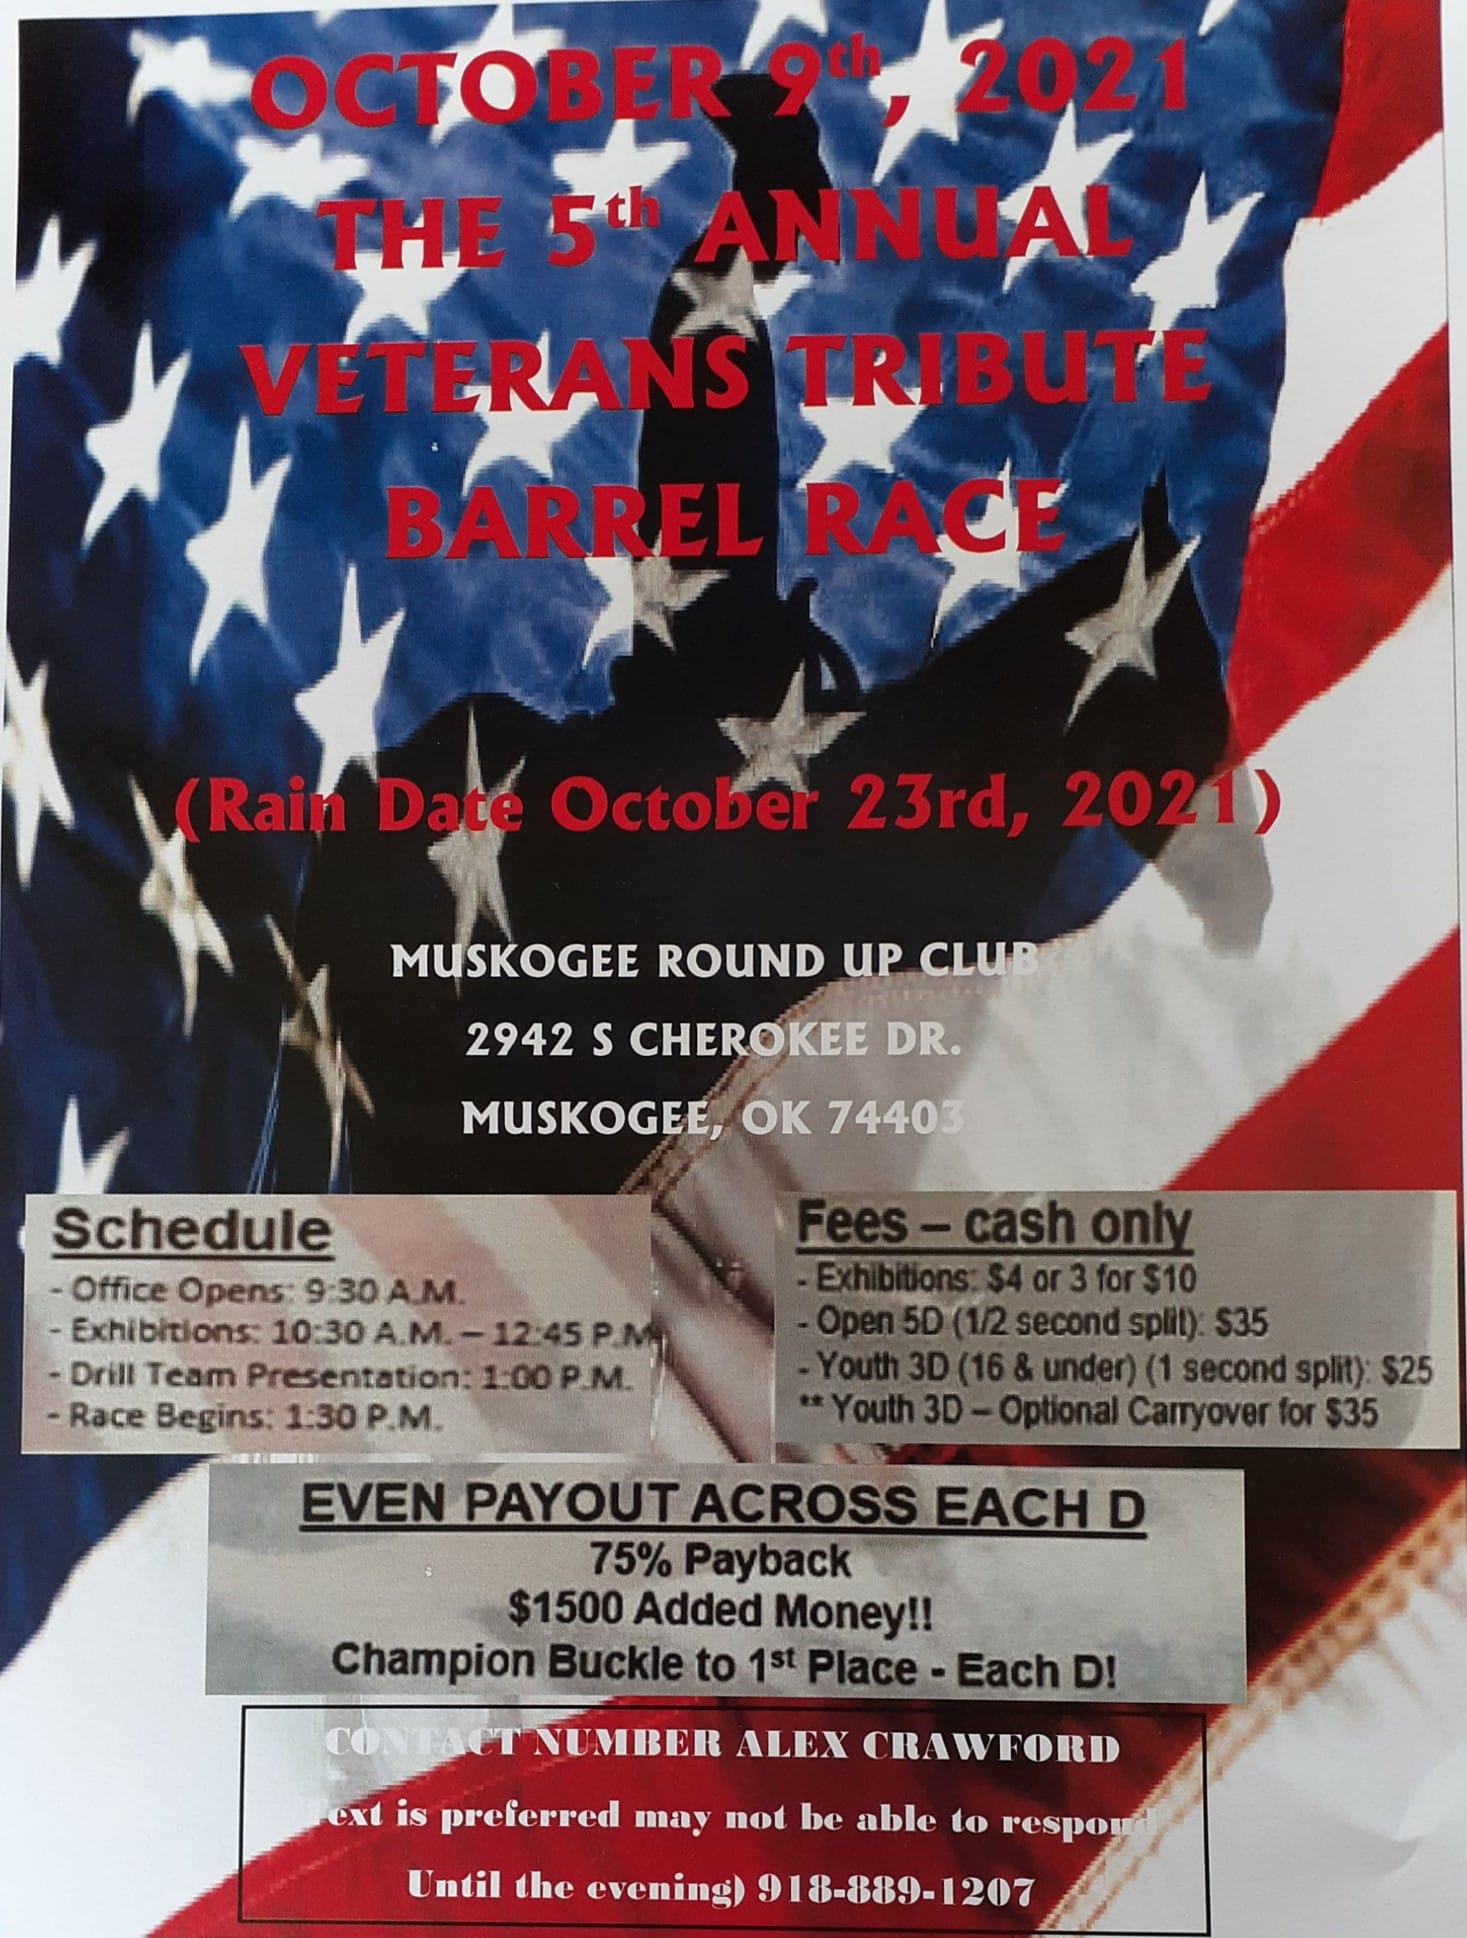 5th Annual Veterans Tribute Barrel Race